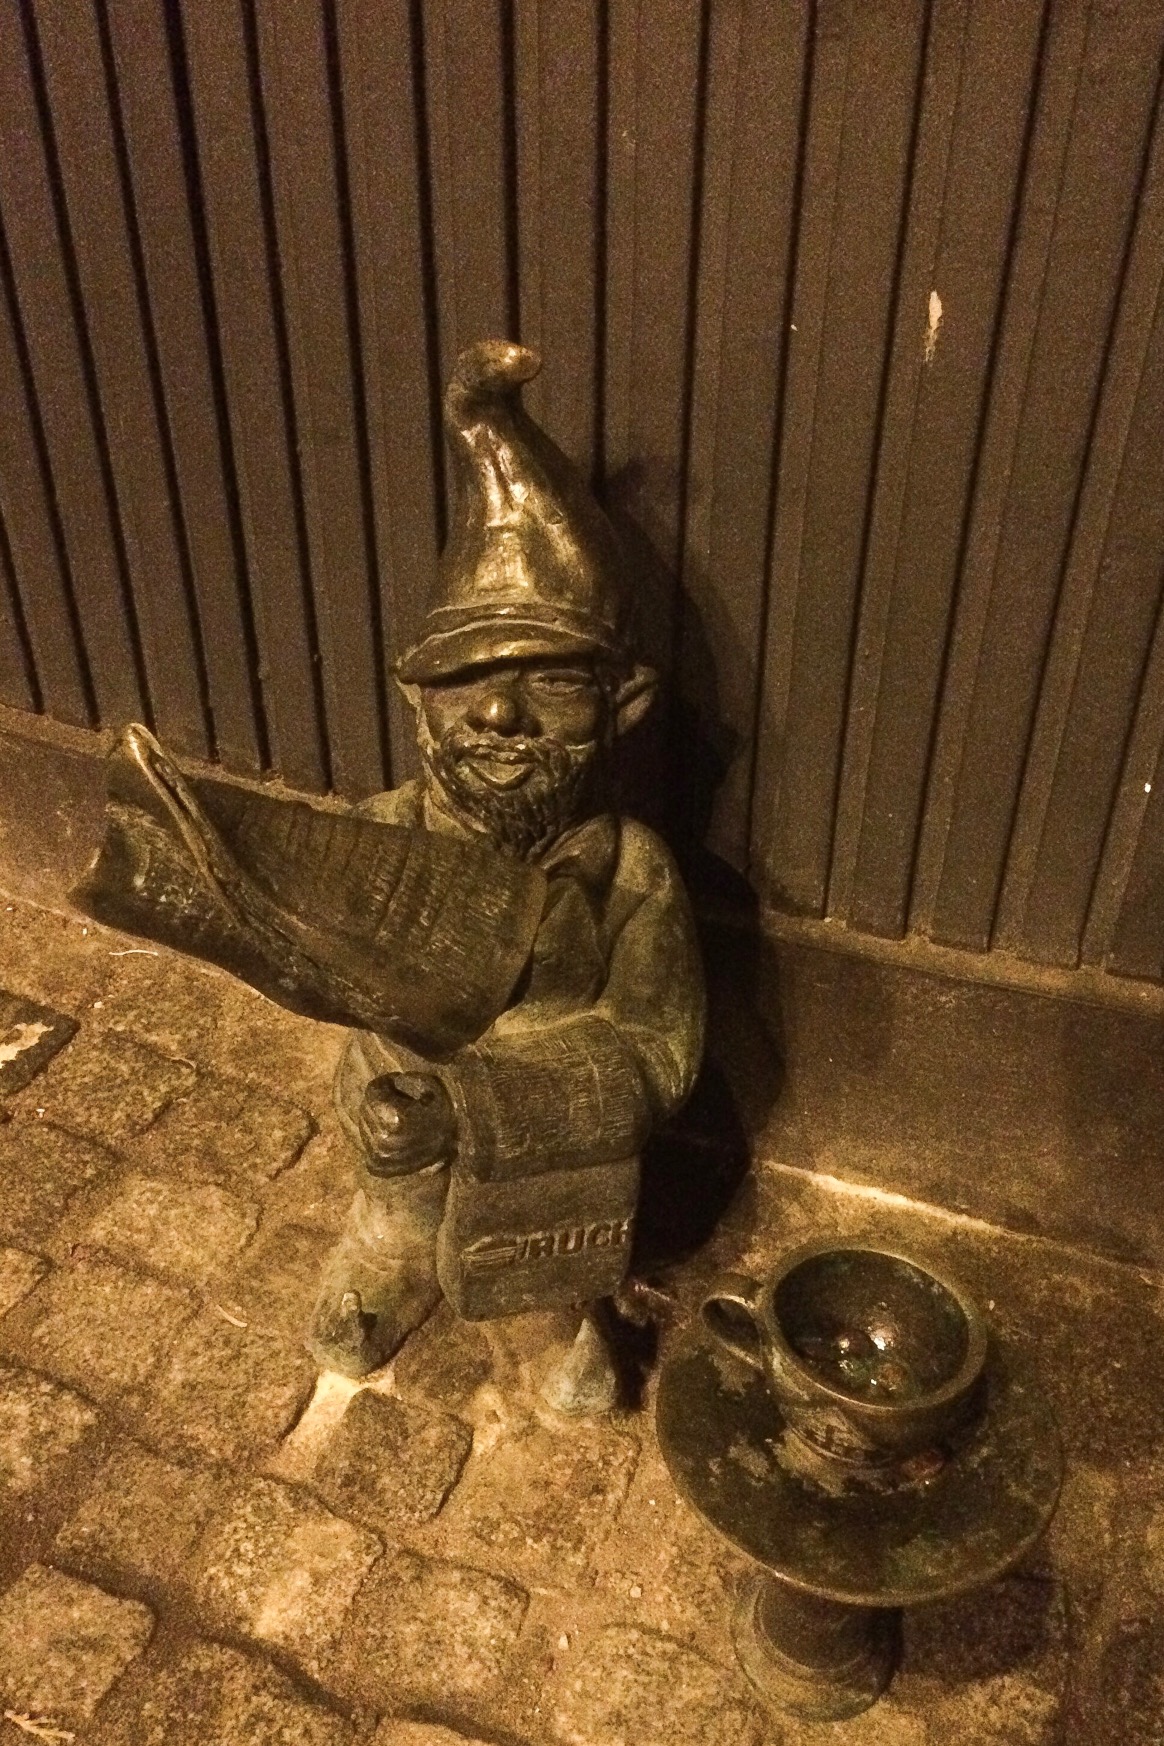 Wroclaw gnomes